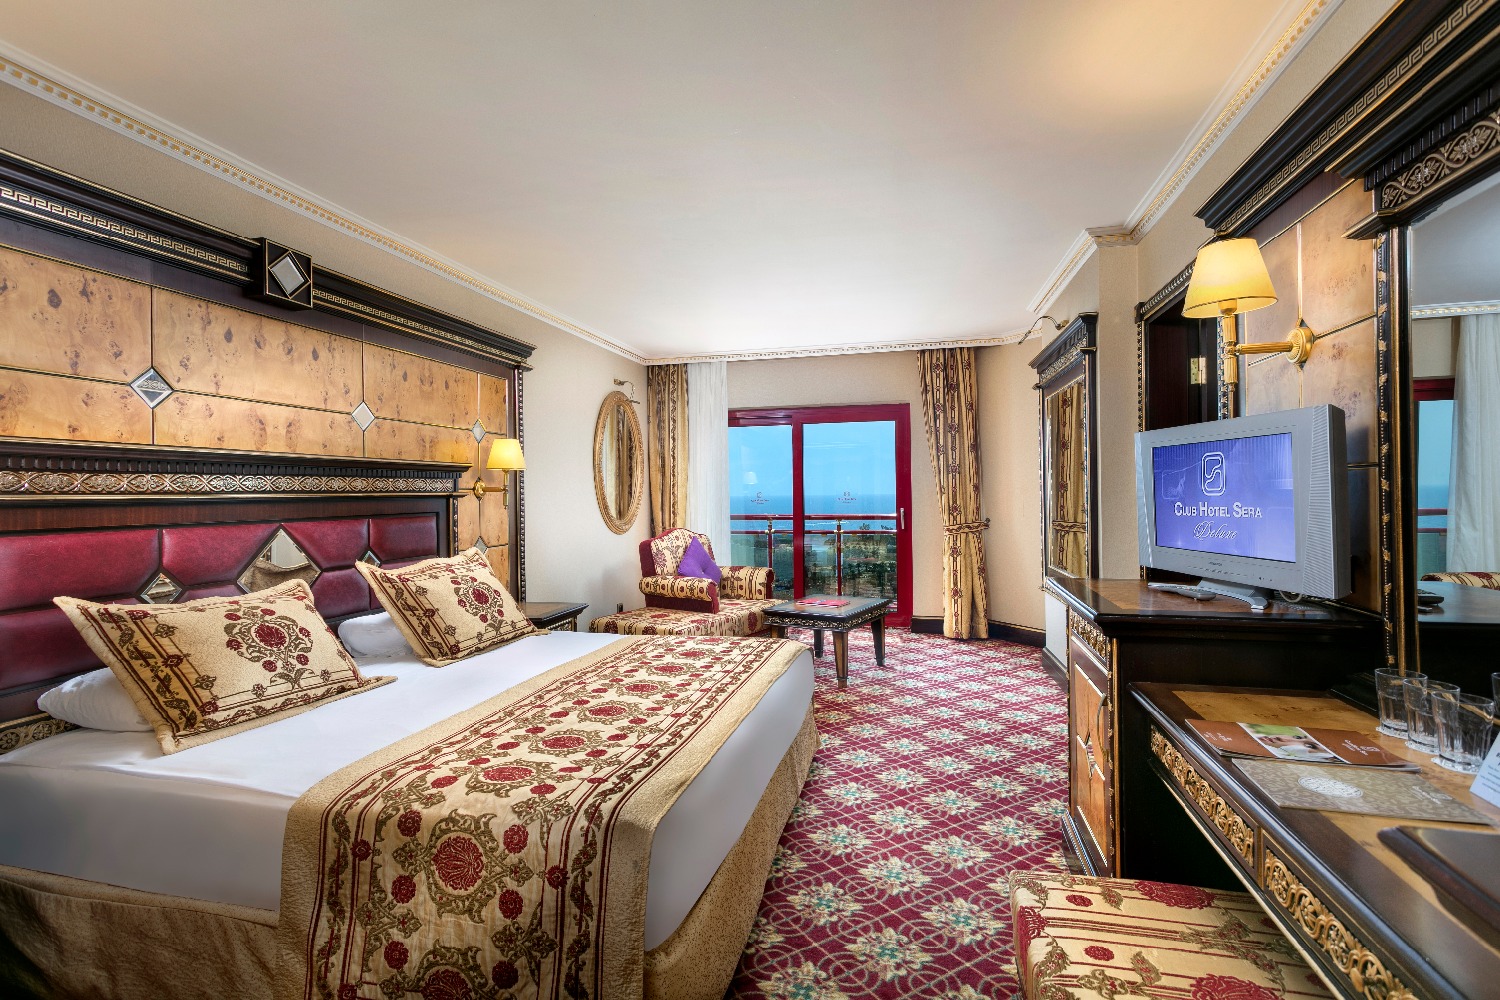 Letovanje Turska,avionom, Antalija, hotel Club hotel Sera, izgled sobe